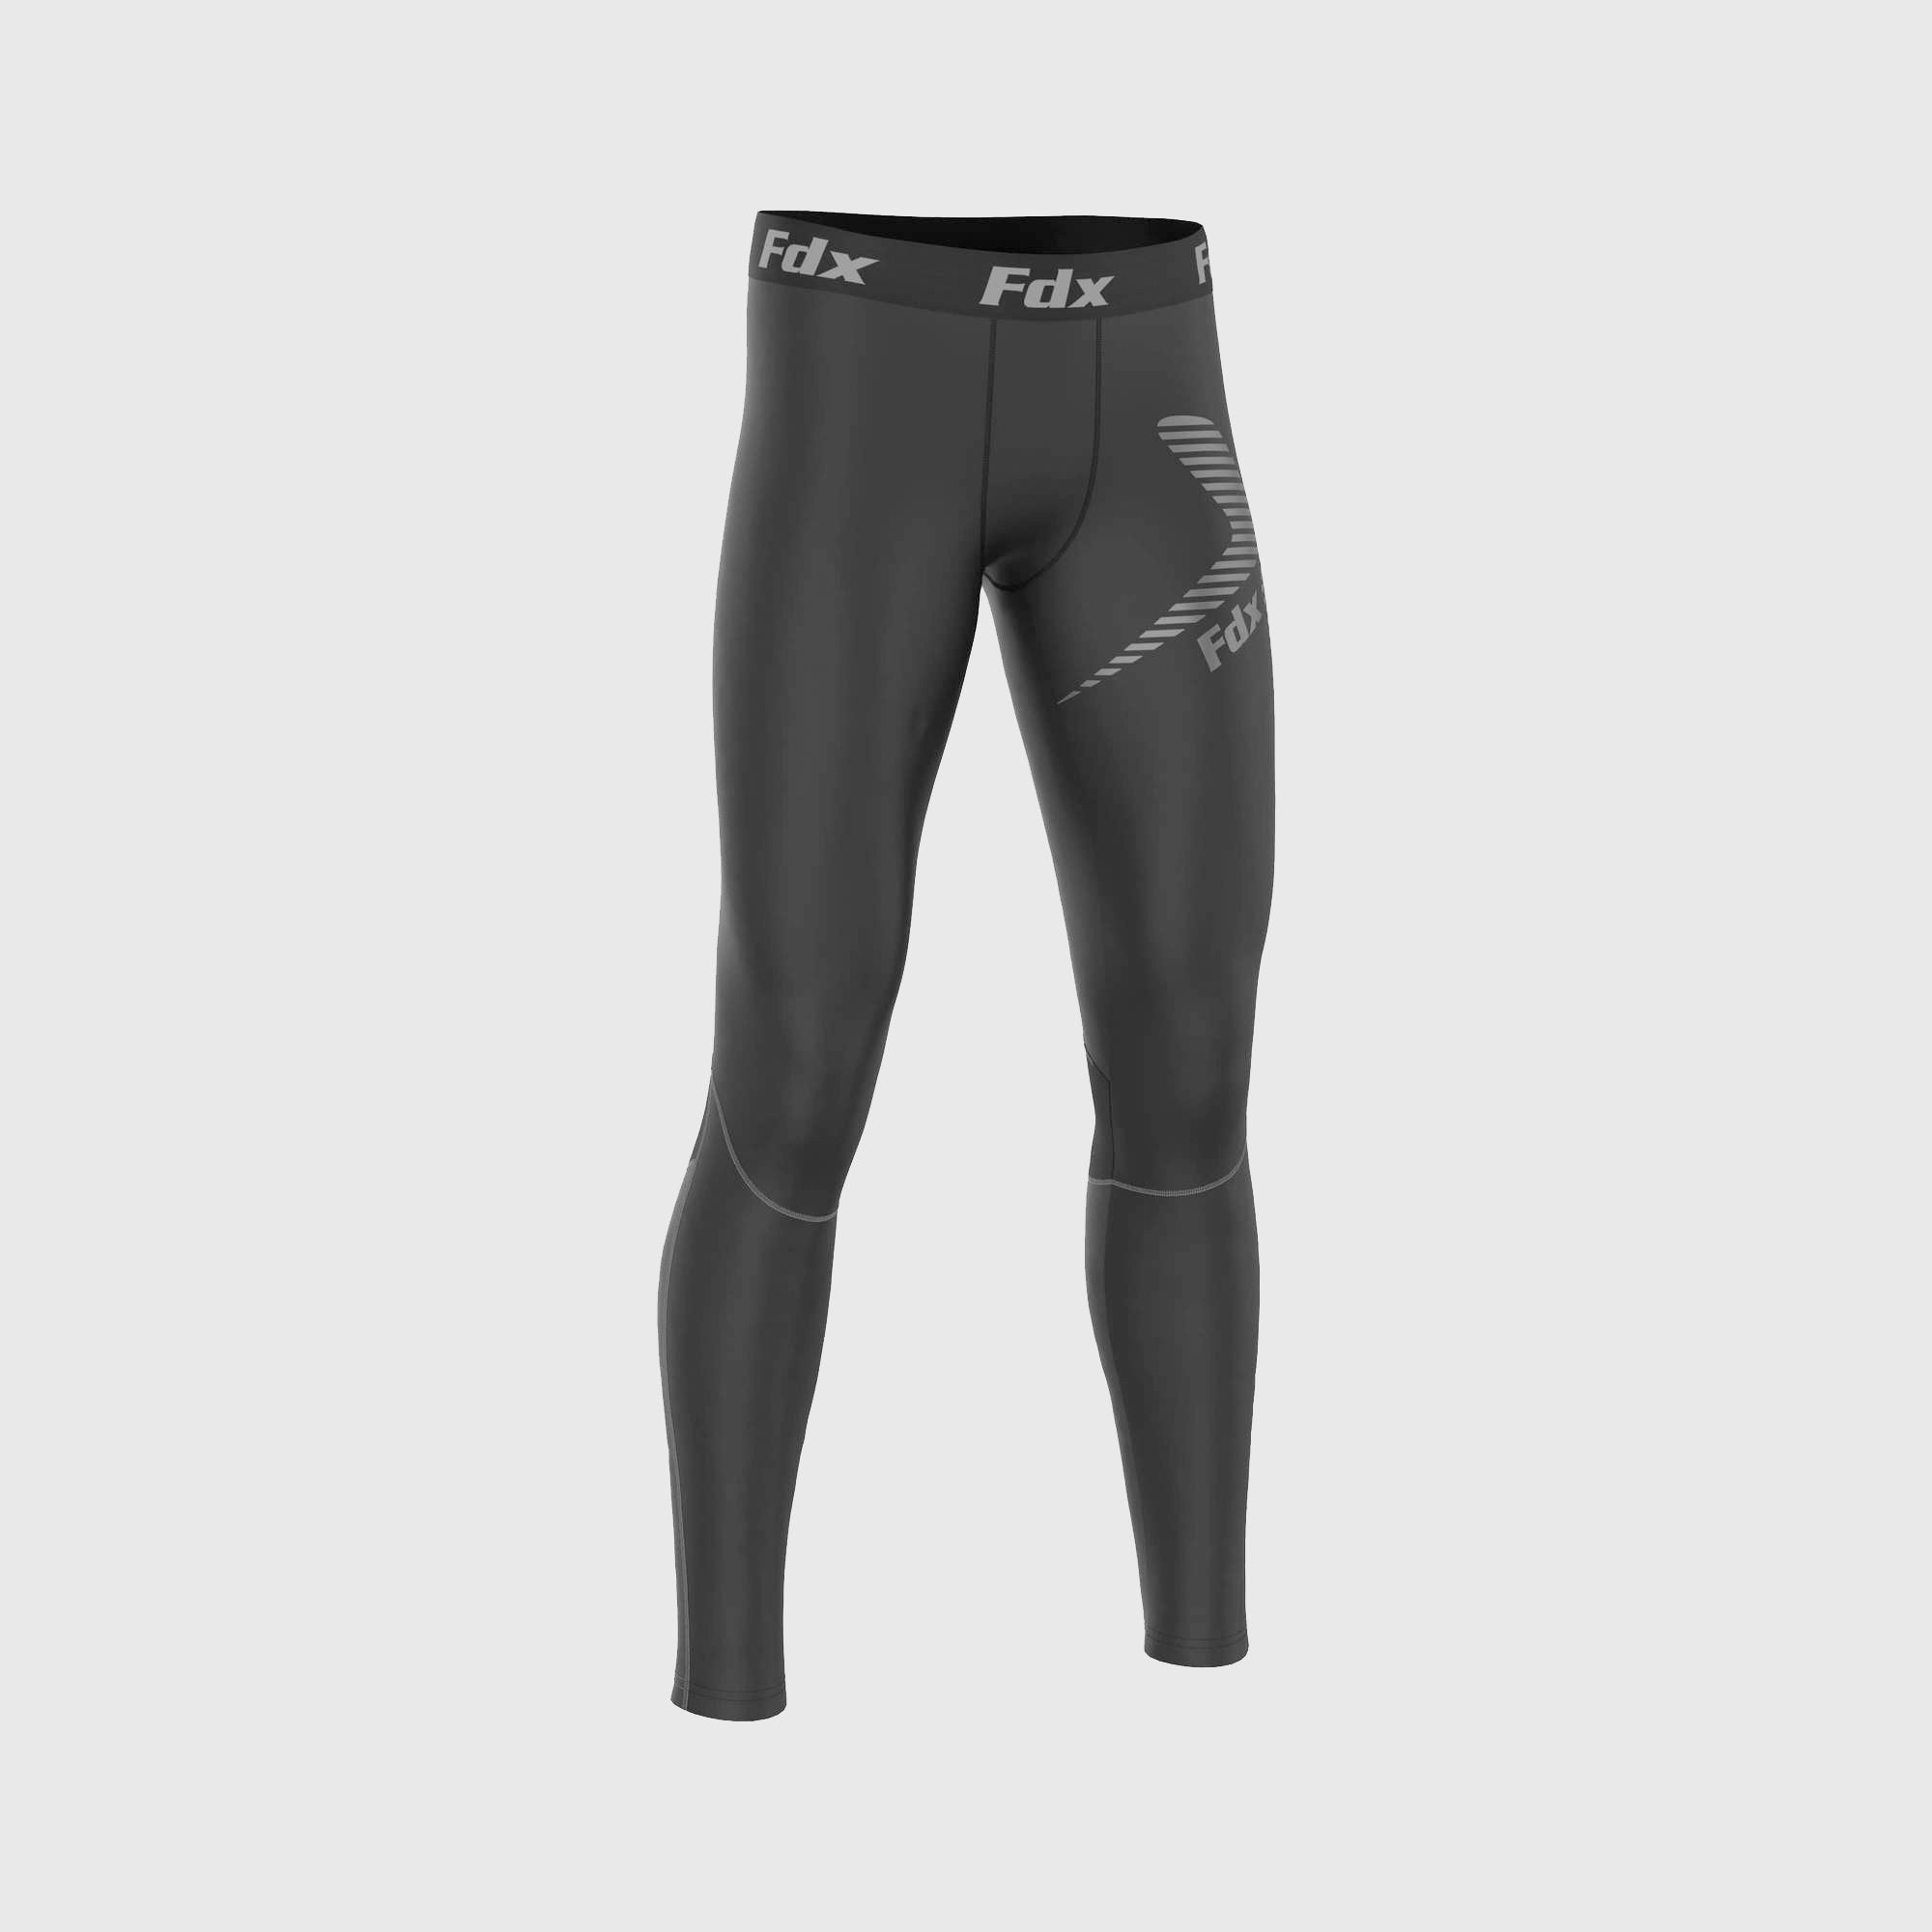 Fdx Recoil Grey Men's Compression Winter Base Layer Leggings